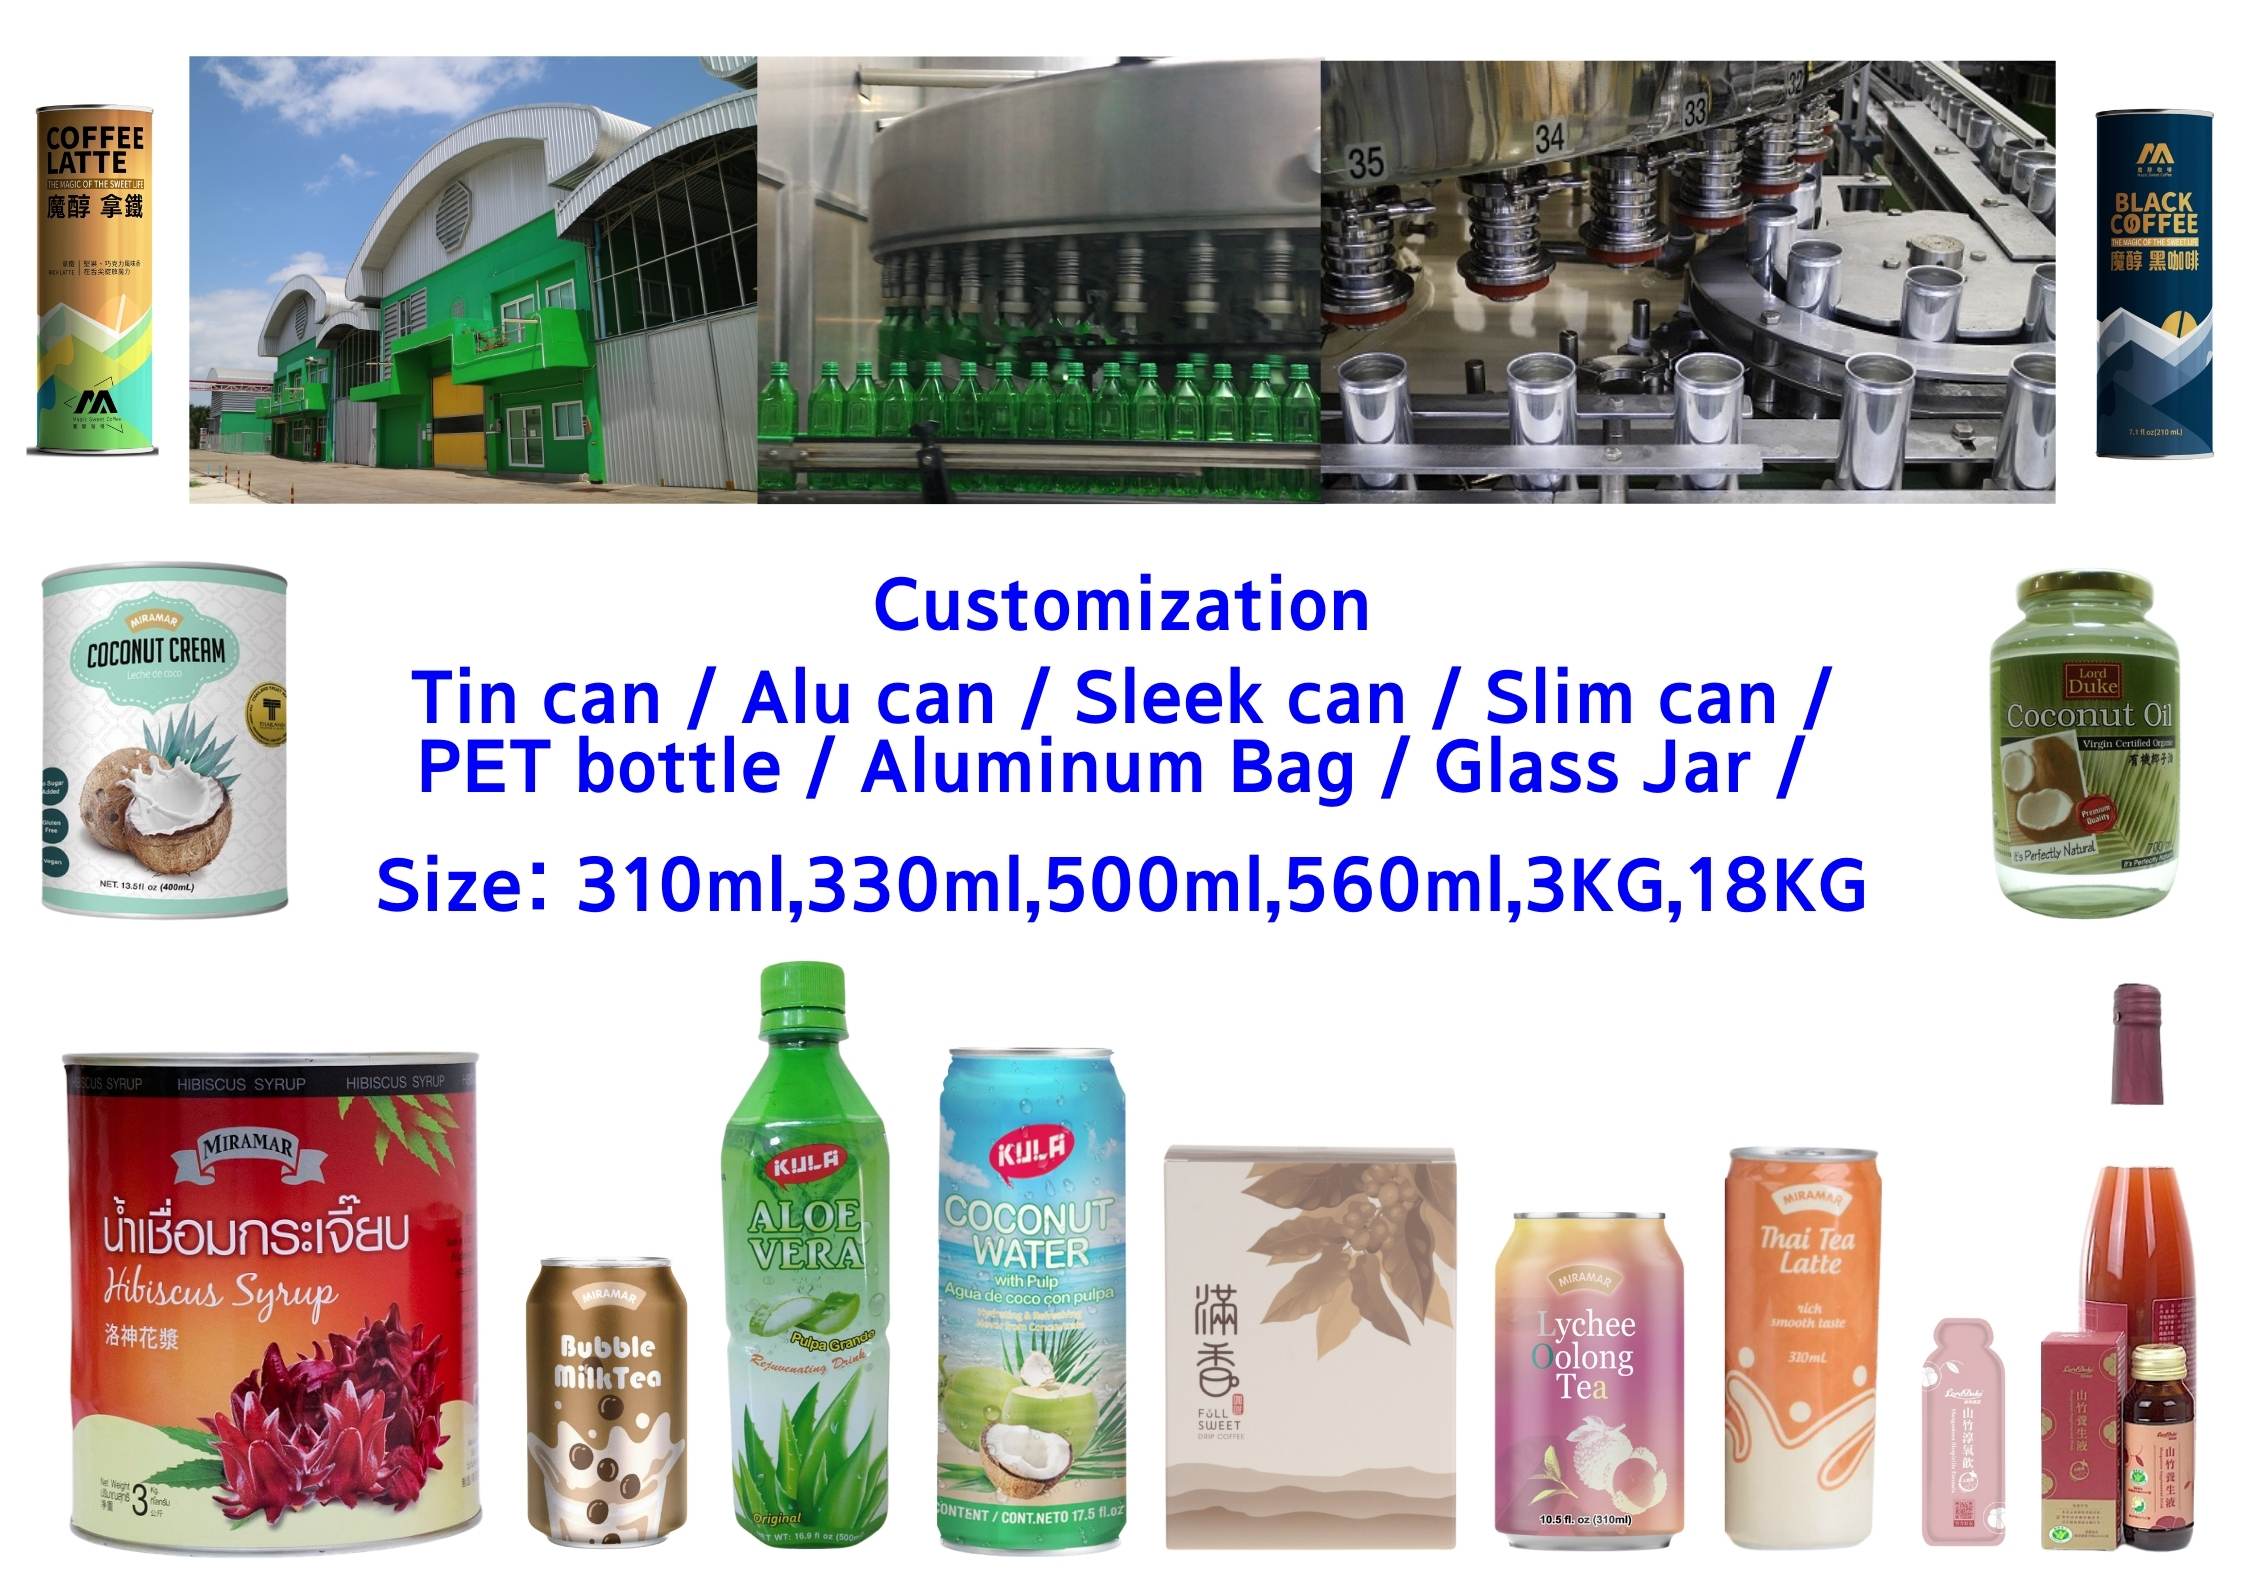 專業代工客製化生產: Customization: Tin can / Alu can / Sleek can / Slim can / PET bottle / Aluminum Bag / Glass Jar /
Size: 310ml,330ml,500ml,560ml,3KG,18KG